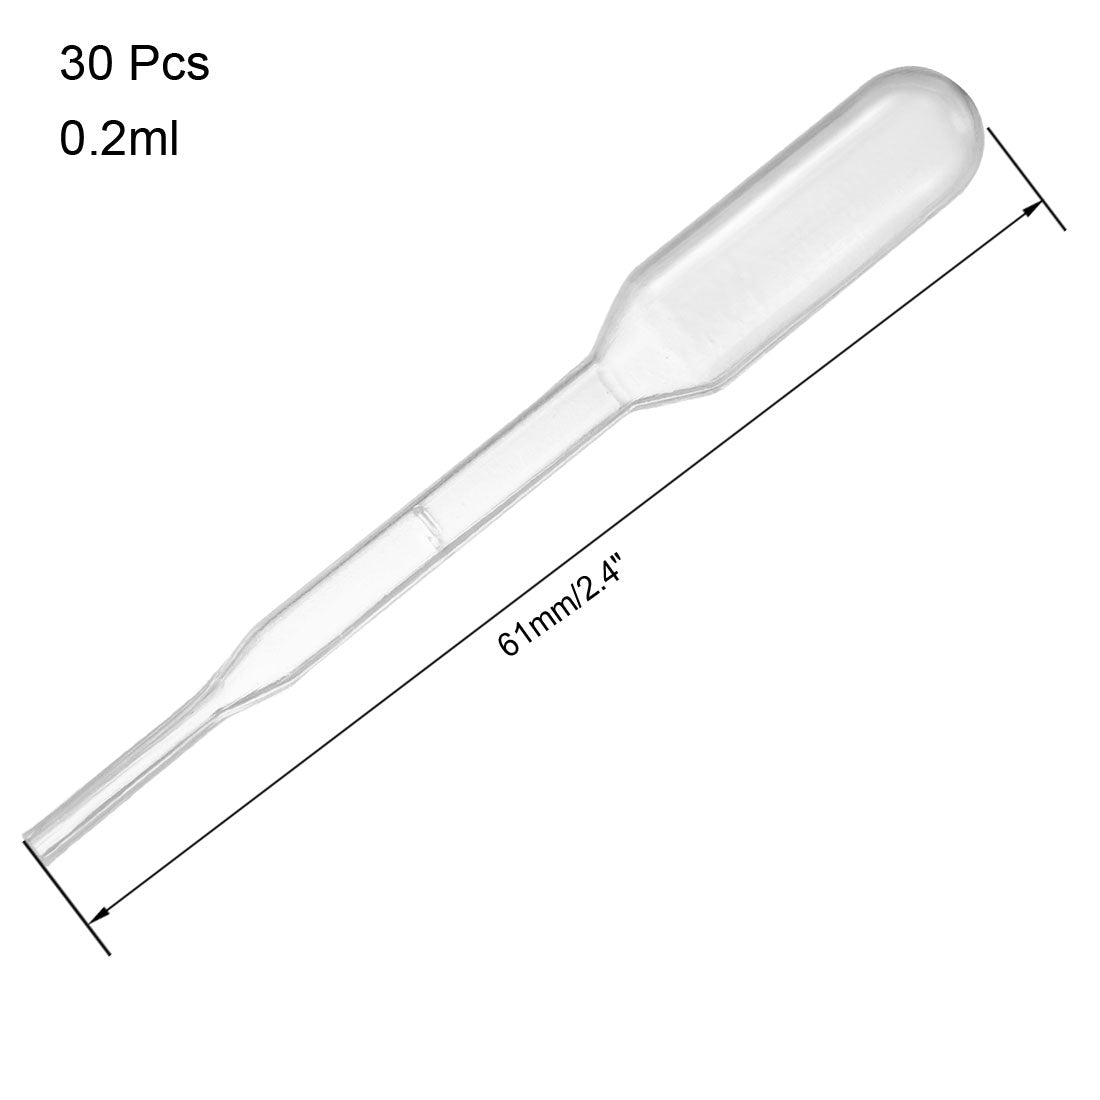 uxcell Uxcell 30 Pcs 3ml Disposable Pasteur Pipettes Test Tubes Liquid Drop Droppers 61mm Long